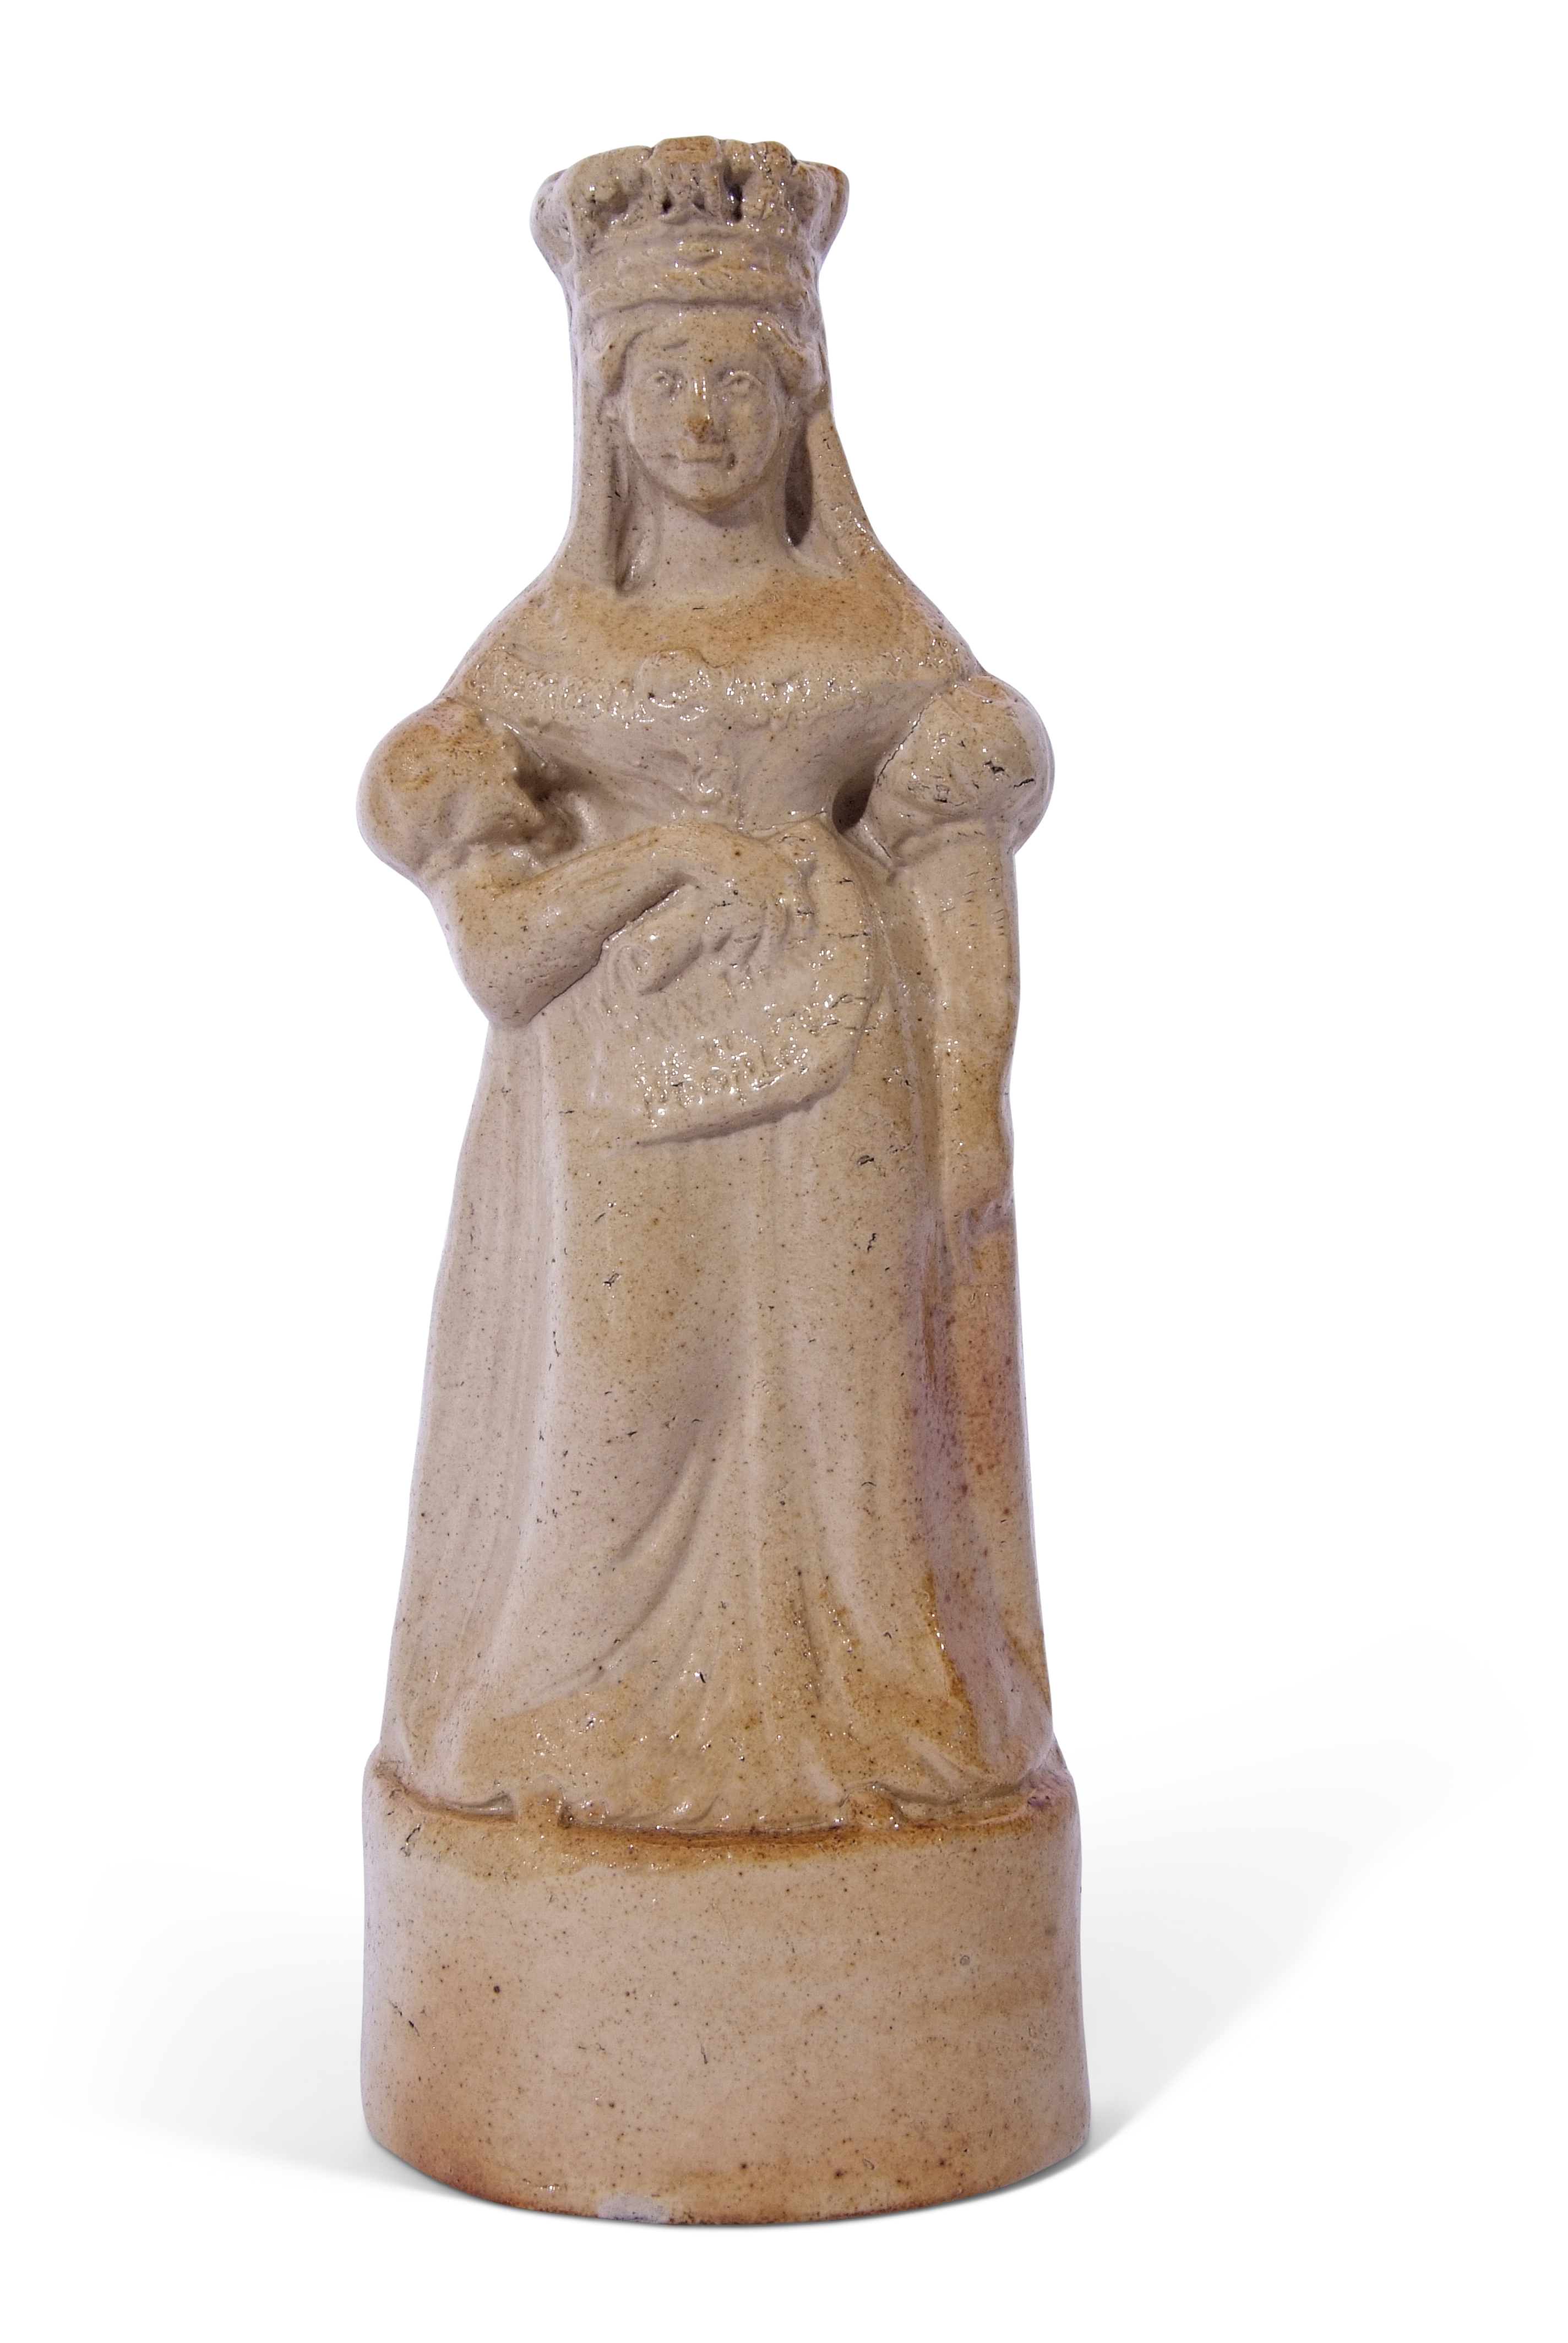 Salt glaze spirit flask, probably Lambeth, modelled as Queen Victoria holding a scroll, impressed "